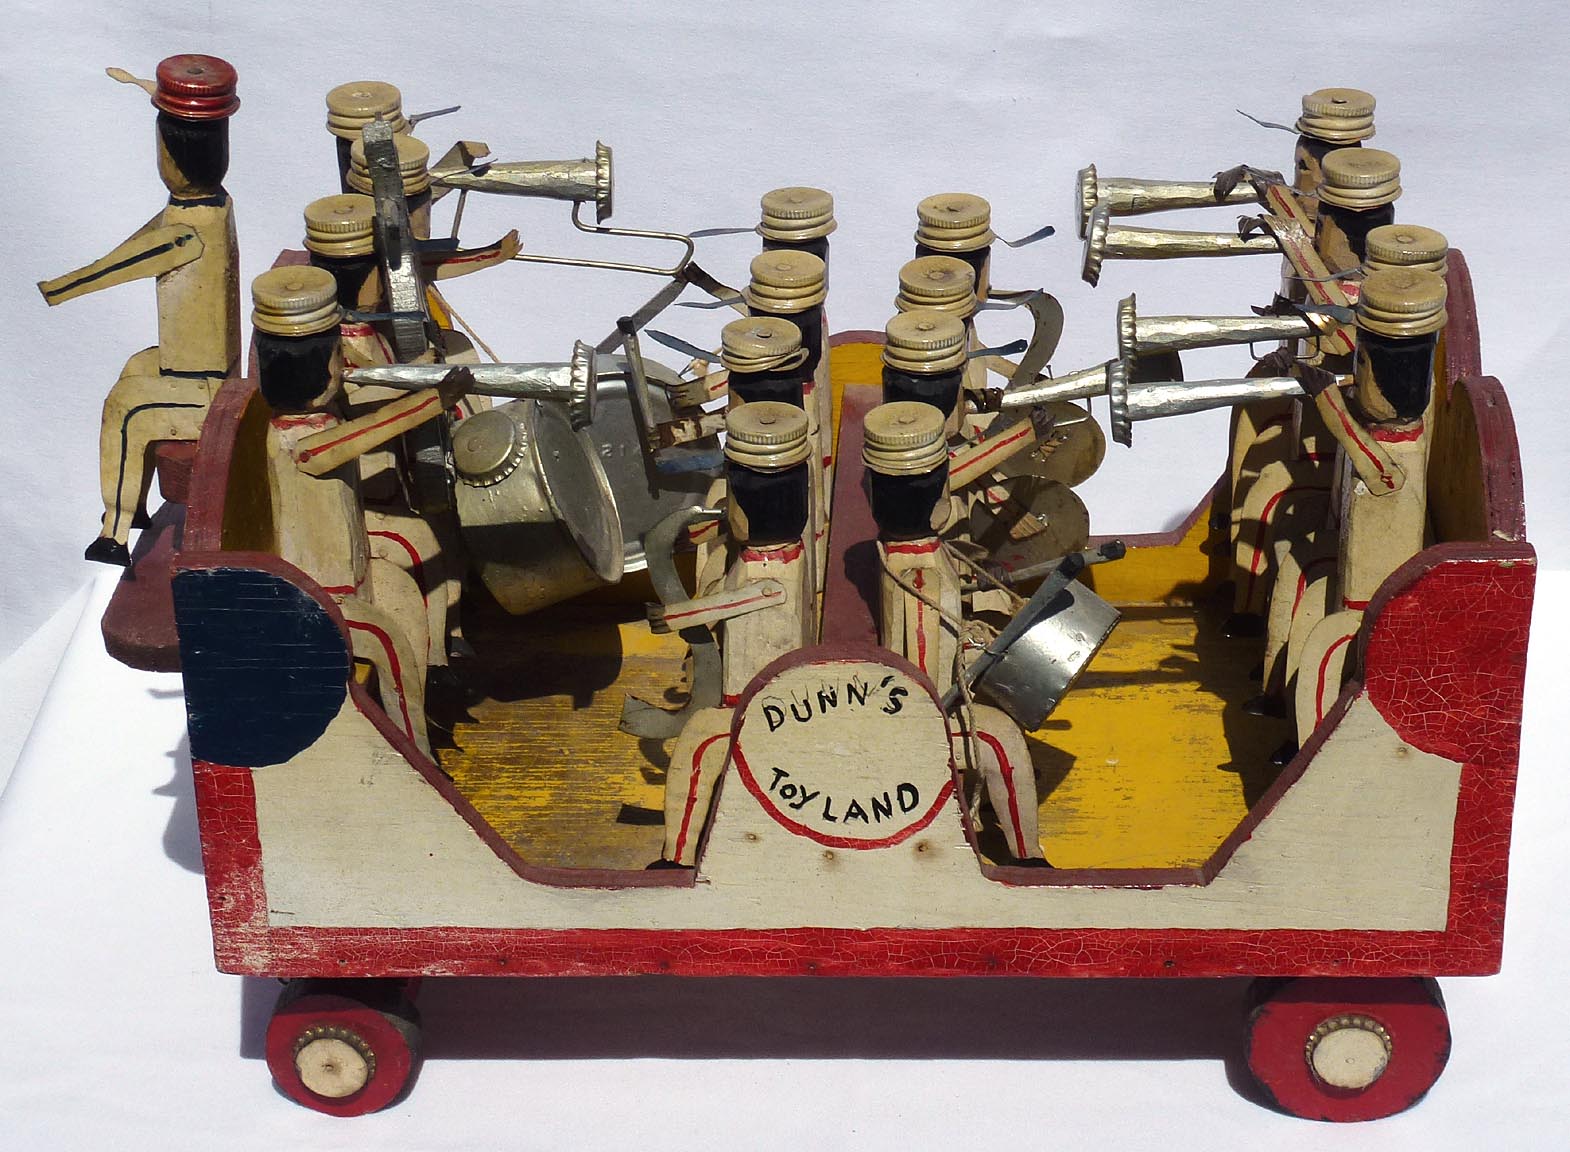 Dunn's Toyland model band wagon